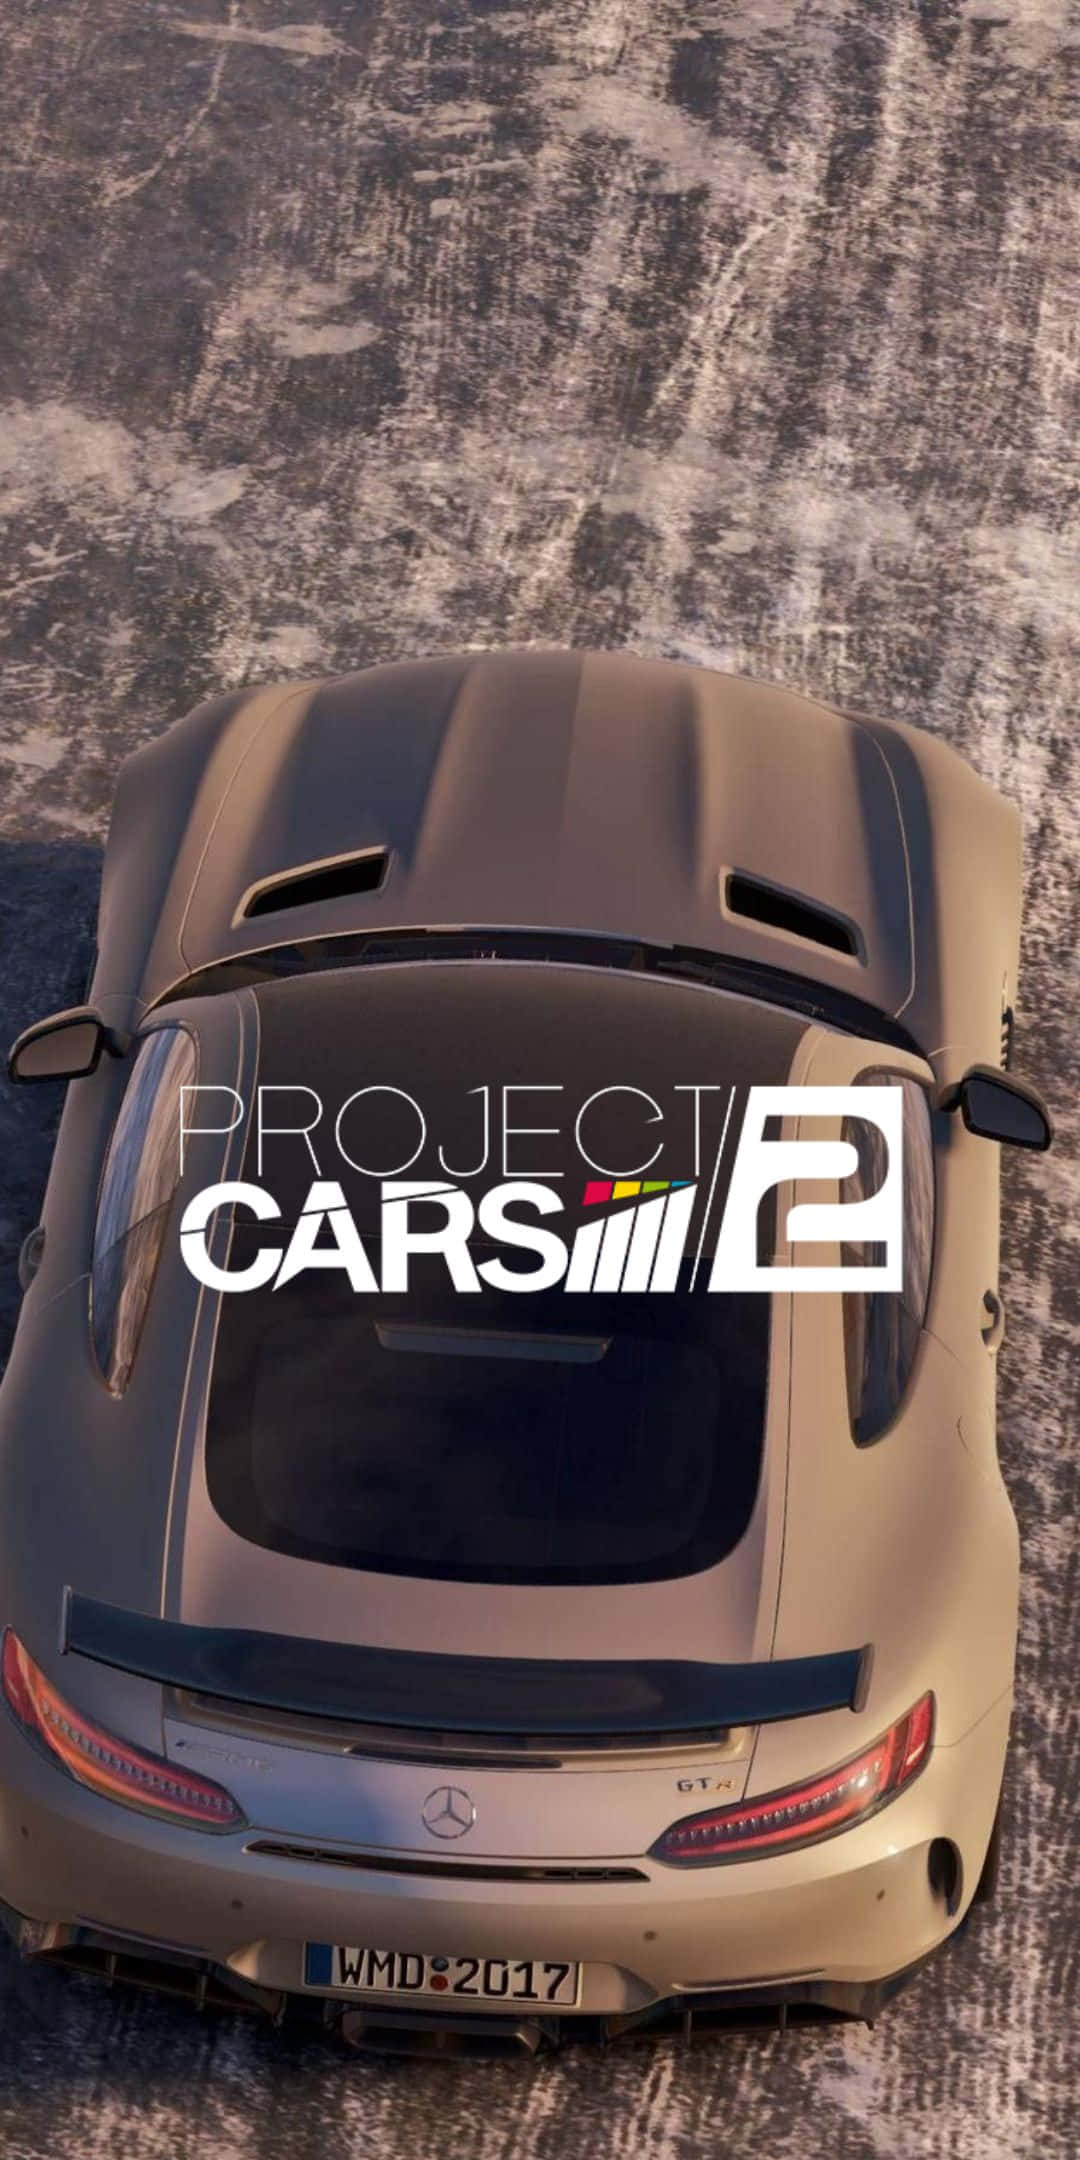 Silver2016 Mercedes Amg Pixel 3 Project Cars 2 Bakgrund